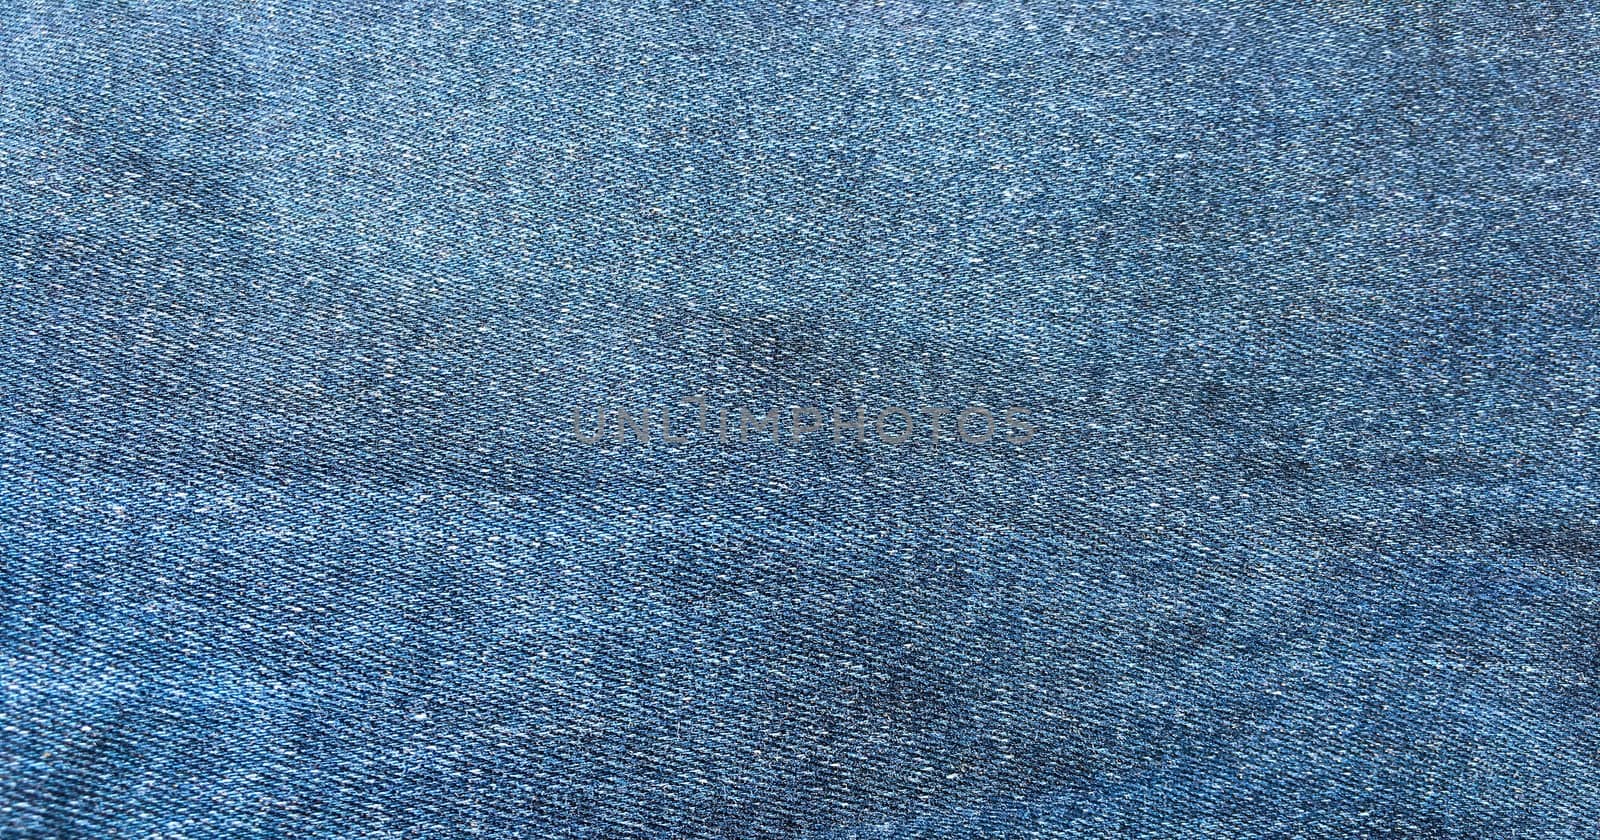 Denim jeans background, Jeans texture, denim fabric. Blue background